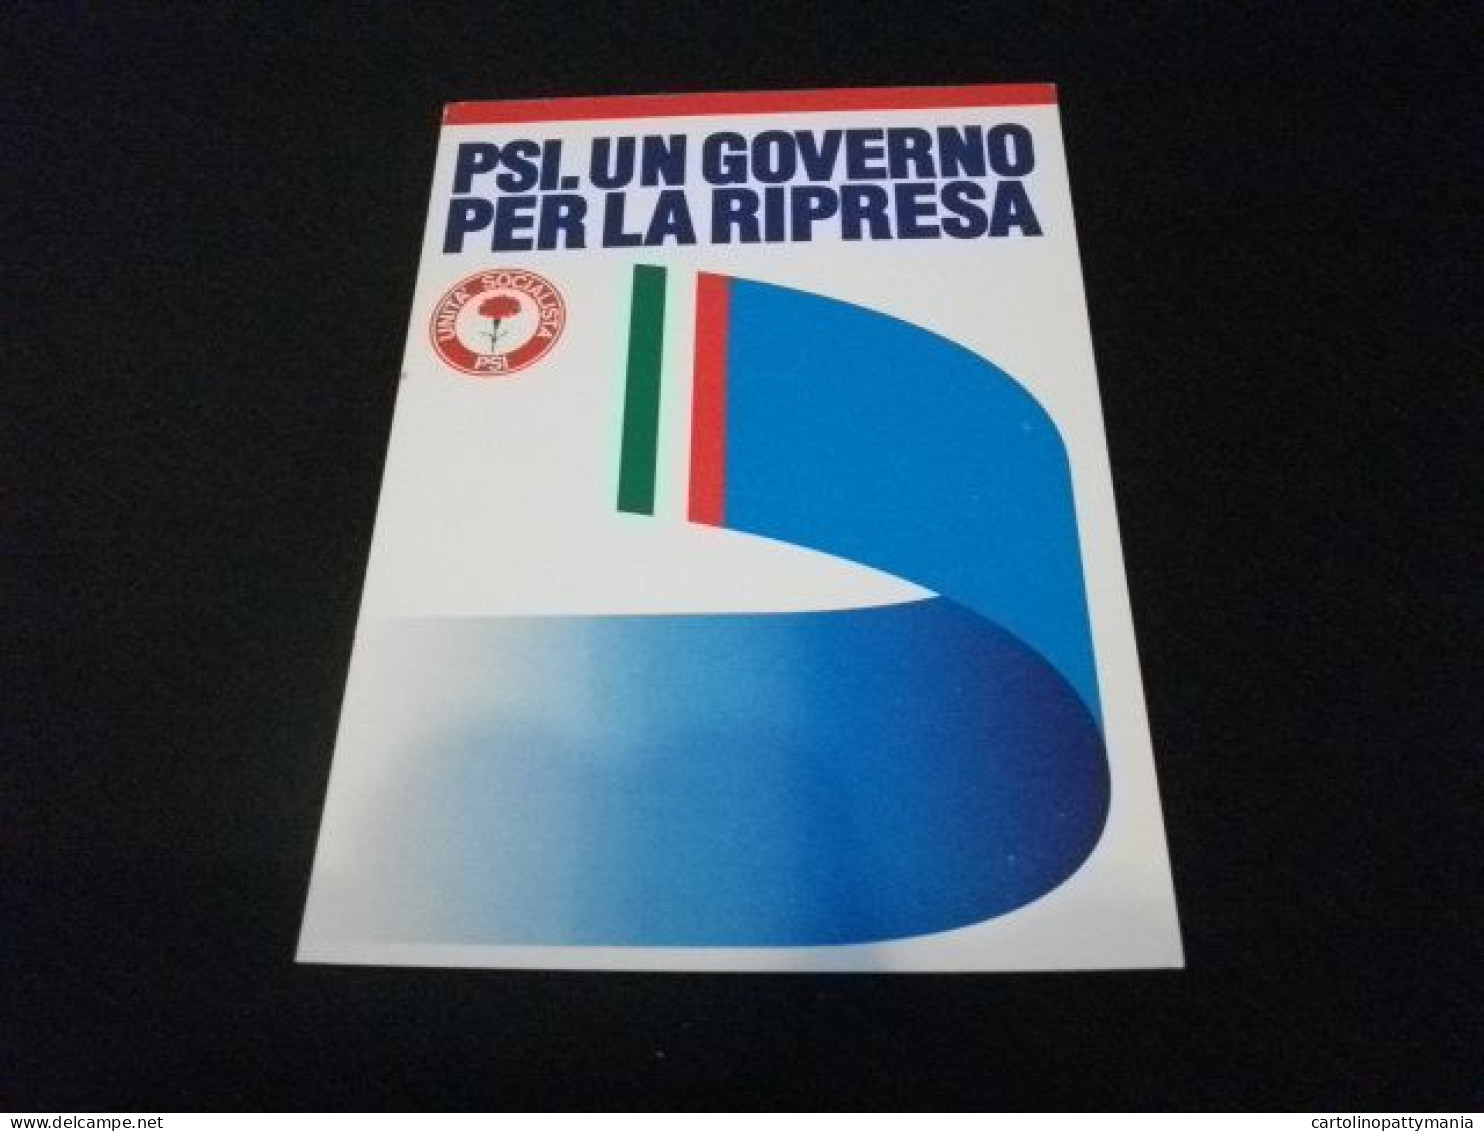 PSI UN GOVERNO PER LA RIPRESA UNITA' SOCIALISTA PARTITO SOCIALISTA ITALIANO - Politieke Partijen & Verkiezingen